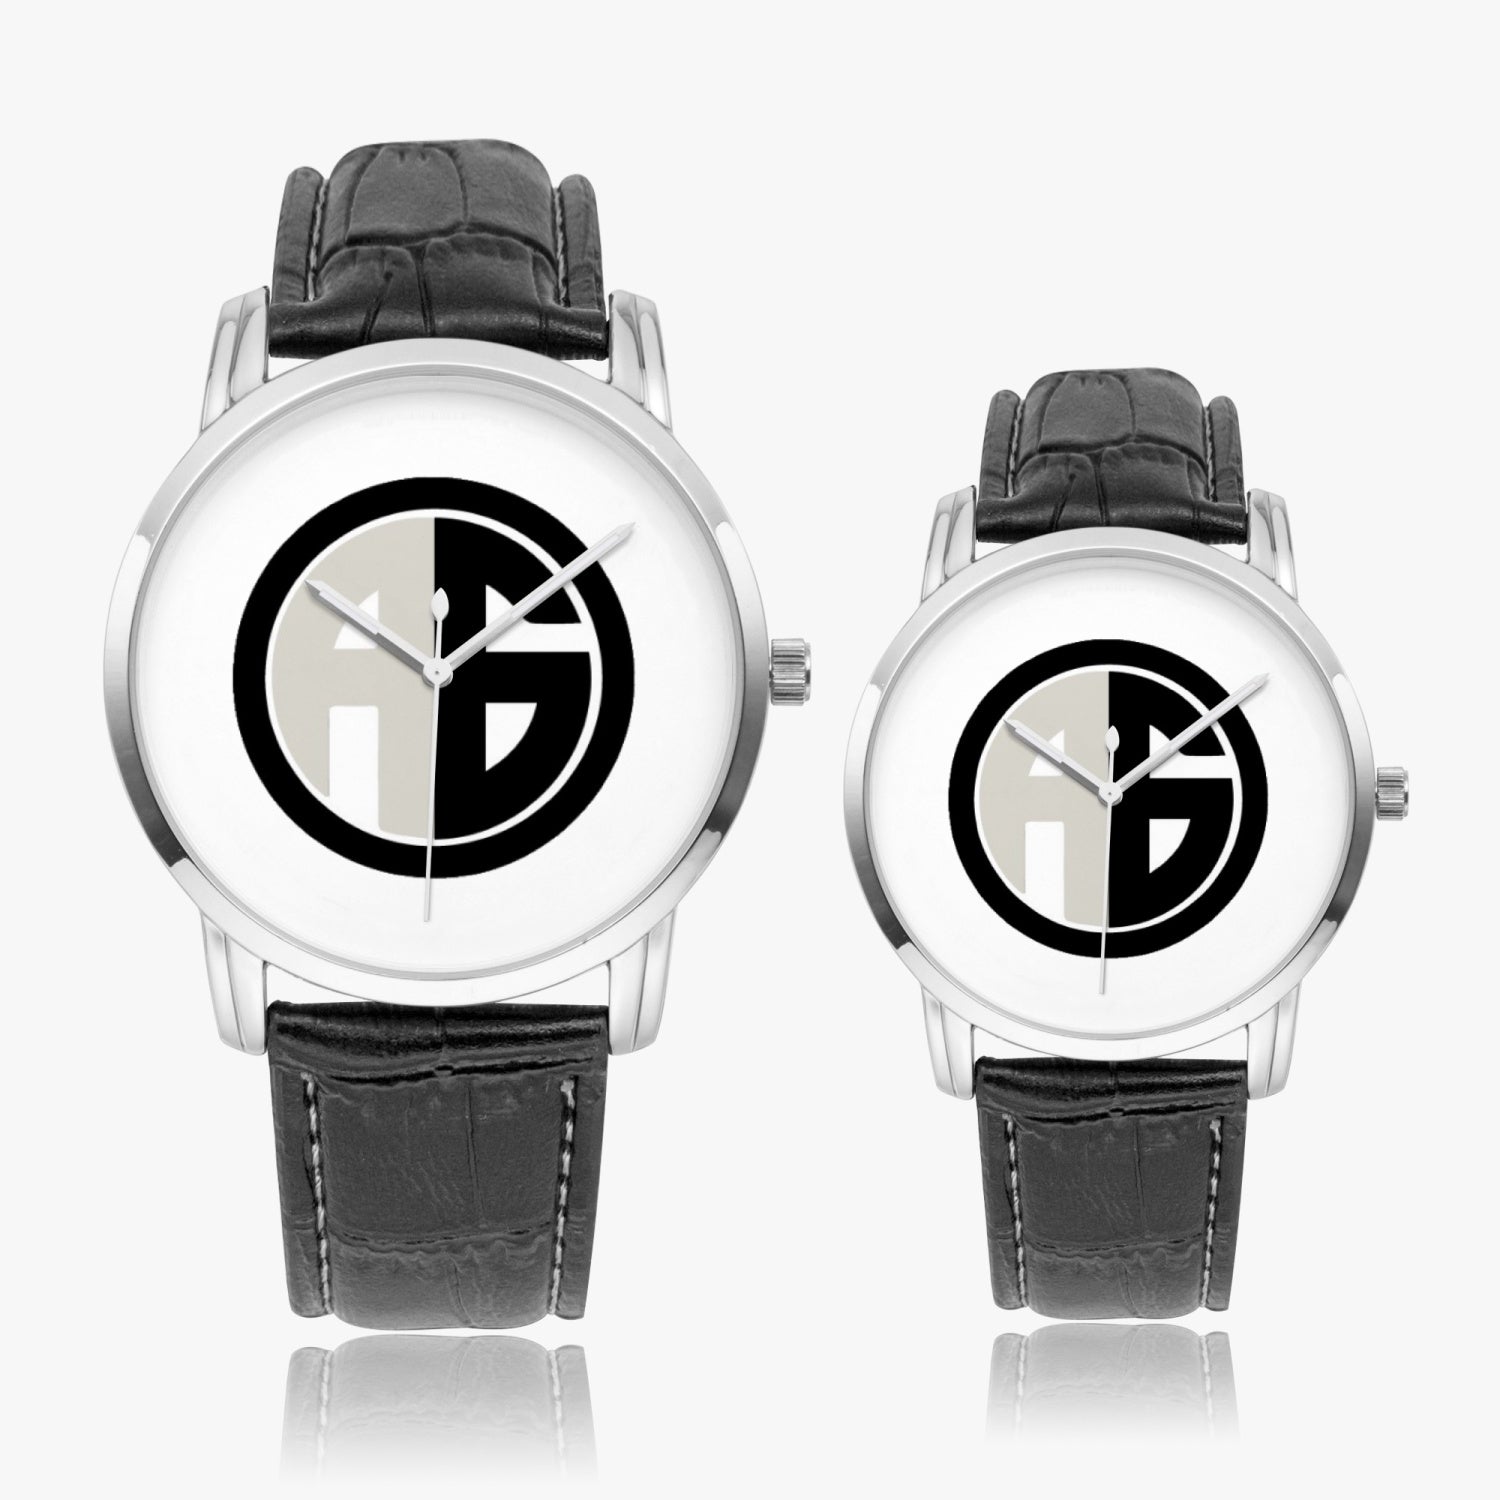 AG Embrace Wrist Watch